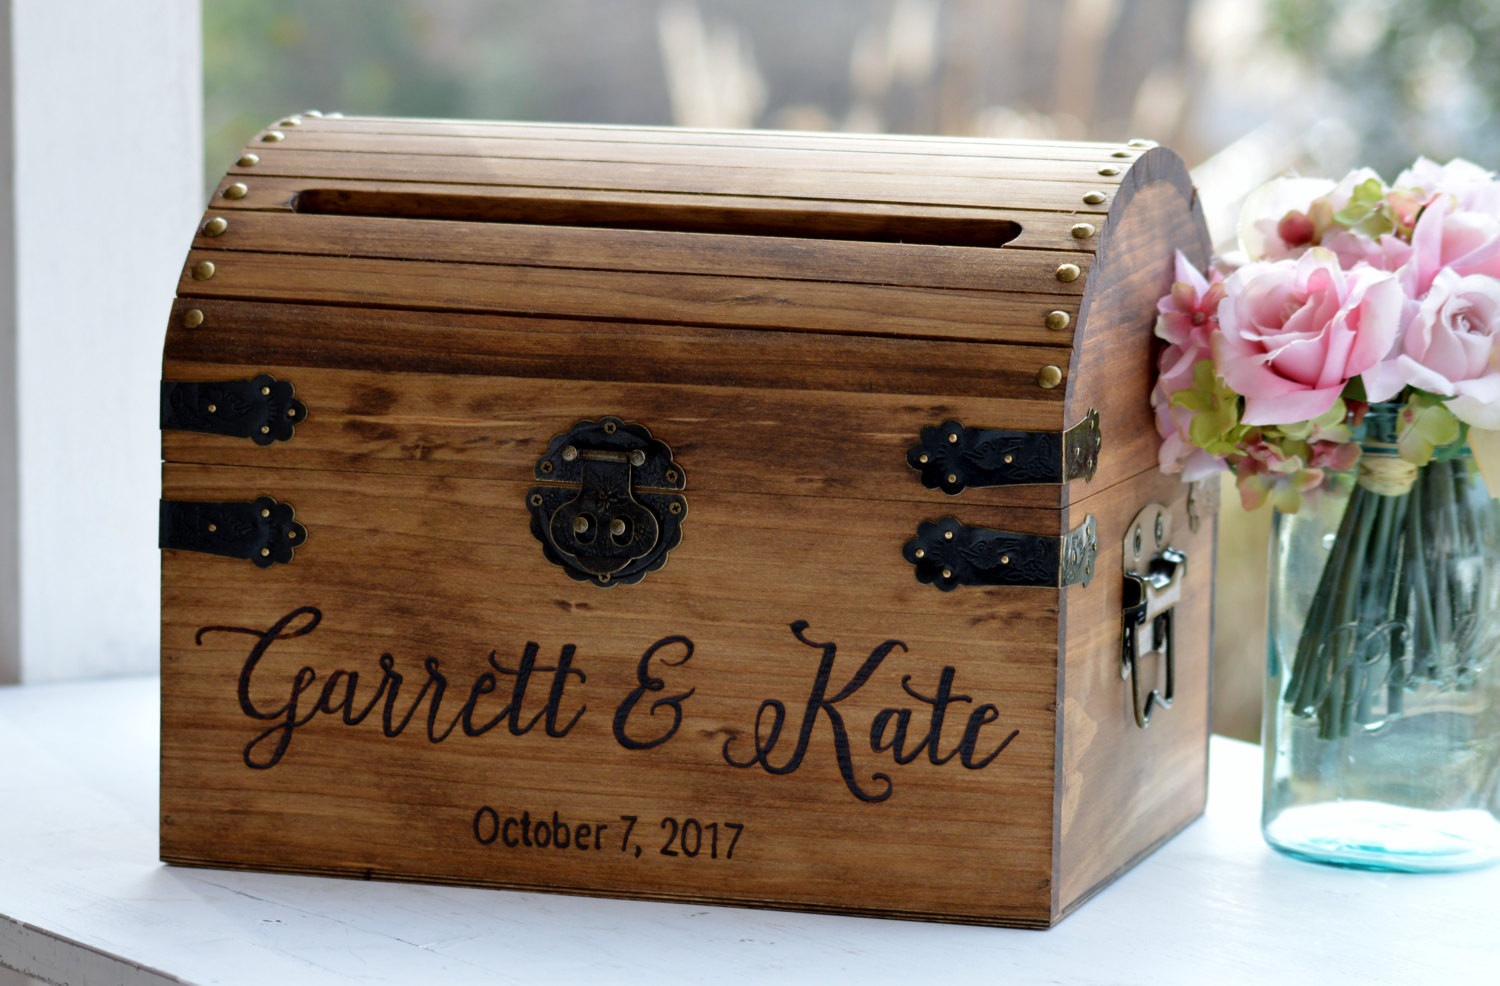 Best ideas about DIY Wooden Wedding Card Box
. Save or Pin Wooden Card Box Rustic Card Box With Slot Bridal Shower Card Now.